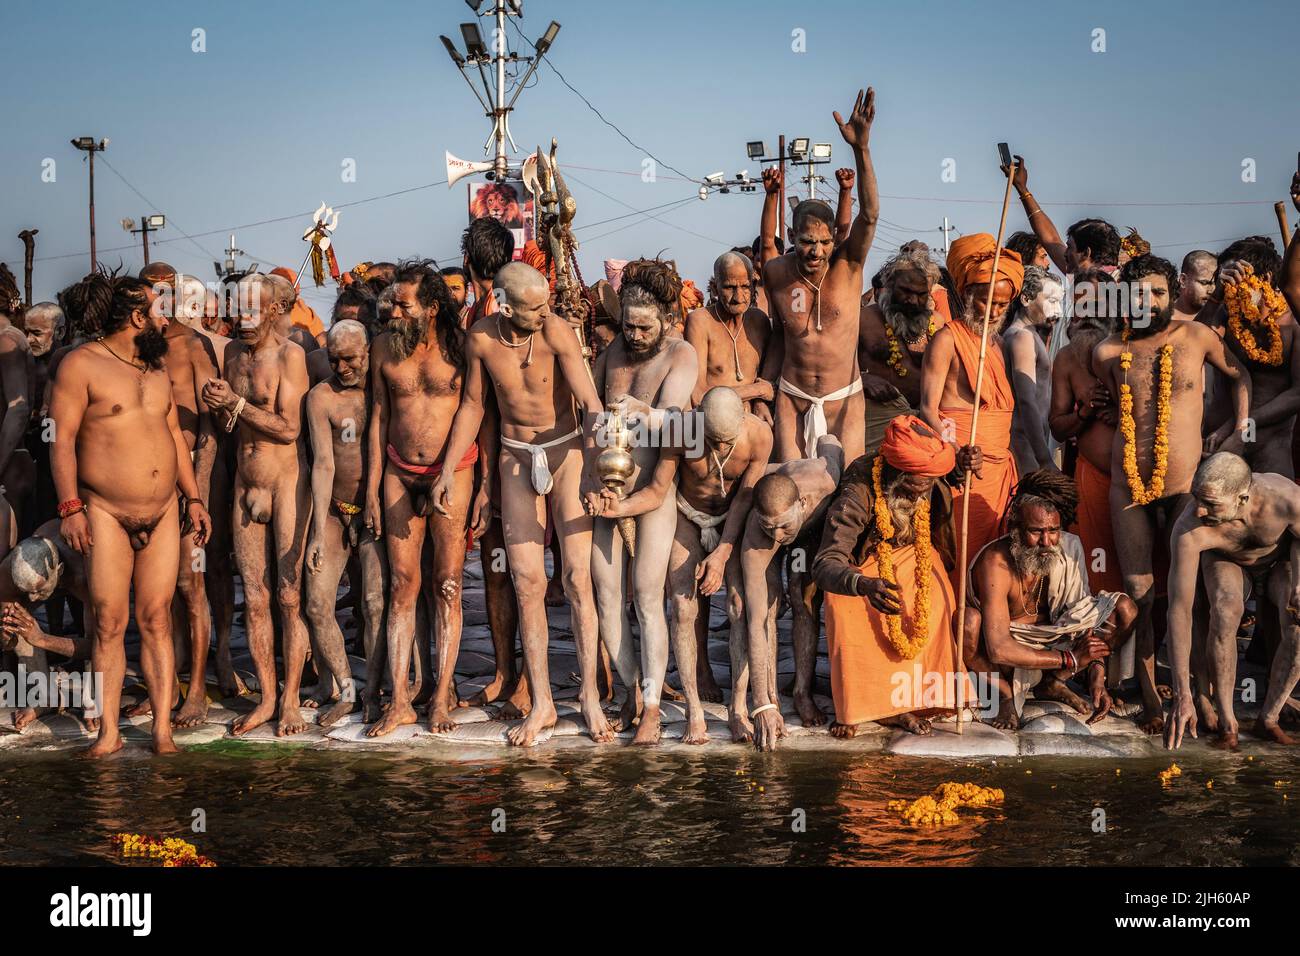 Naga Sadhus (Indian holy men) preparing to enter the sacred waters at the Sangam, Kumbh Mela Festival in Allahabad (Prayagraj), Uttar Pradesh, India. Stock Photo